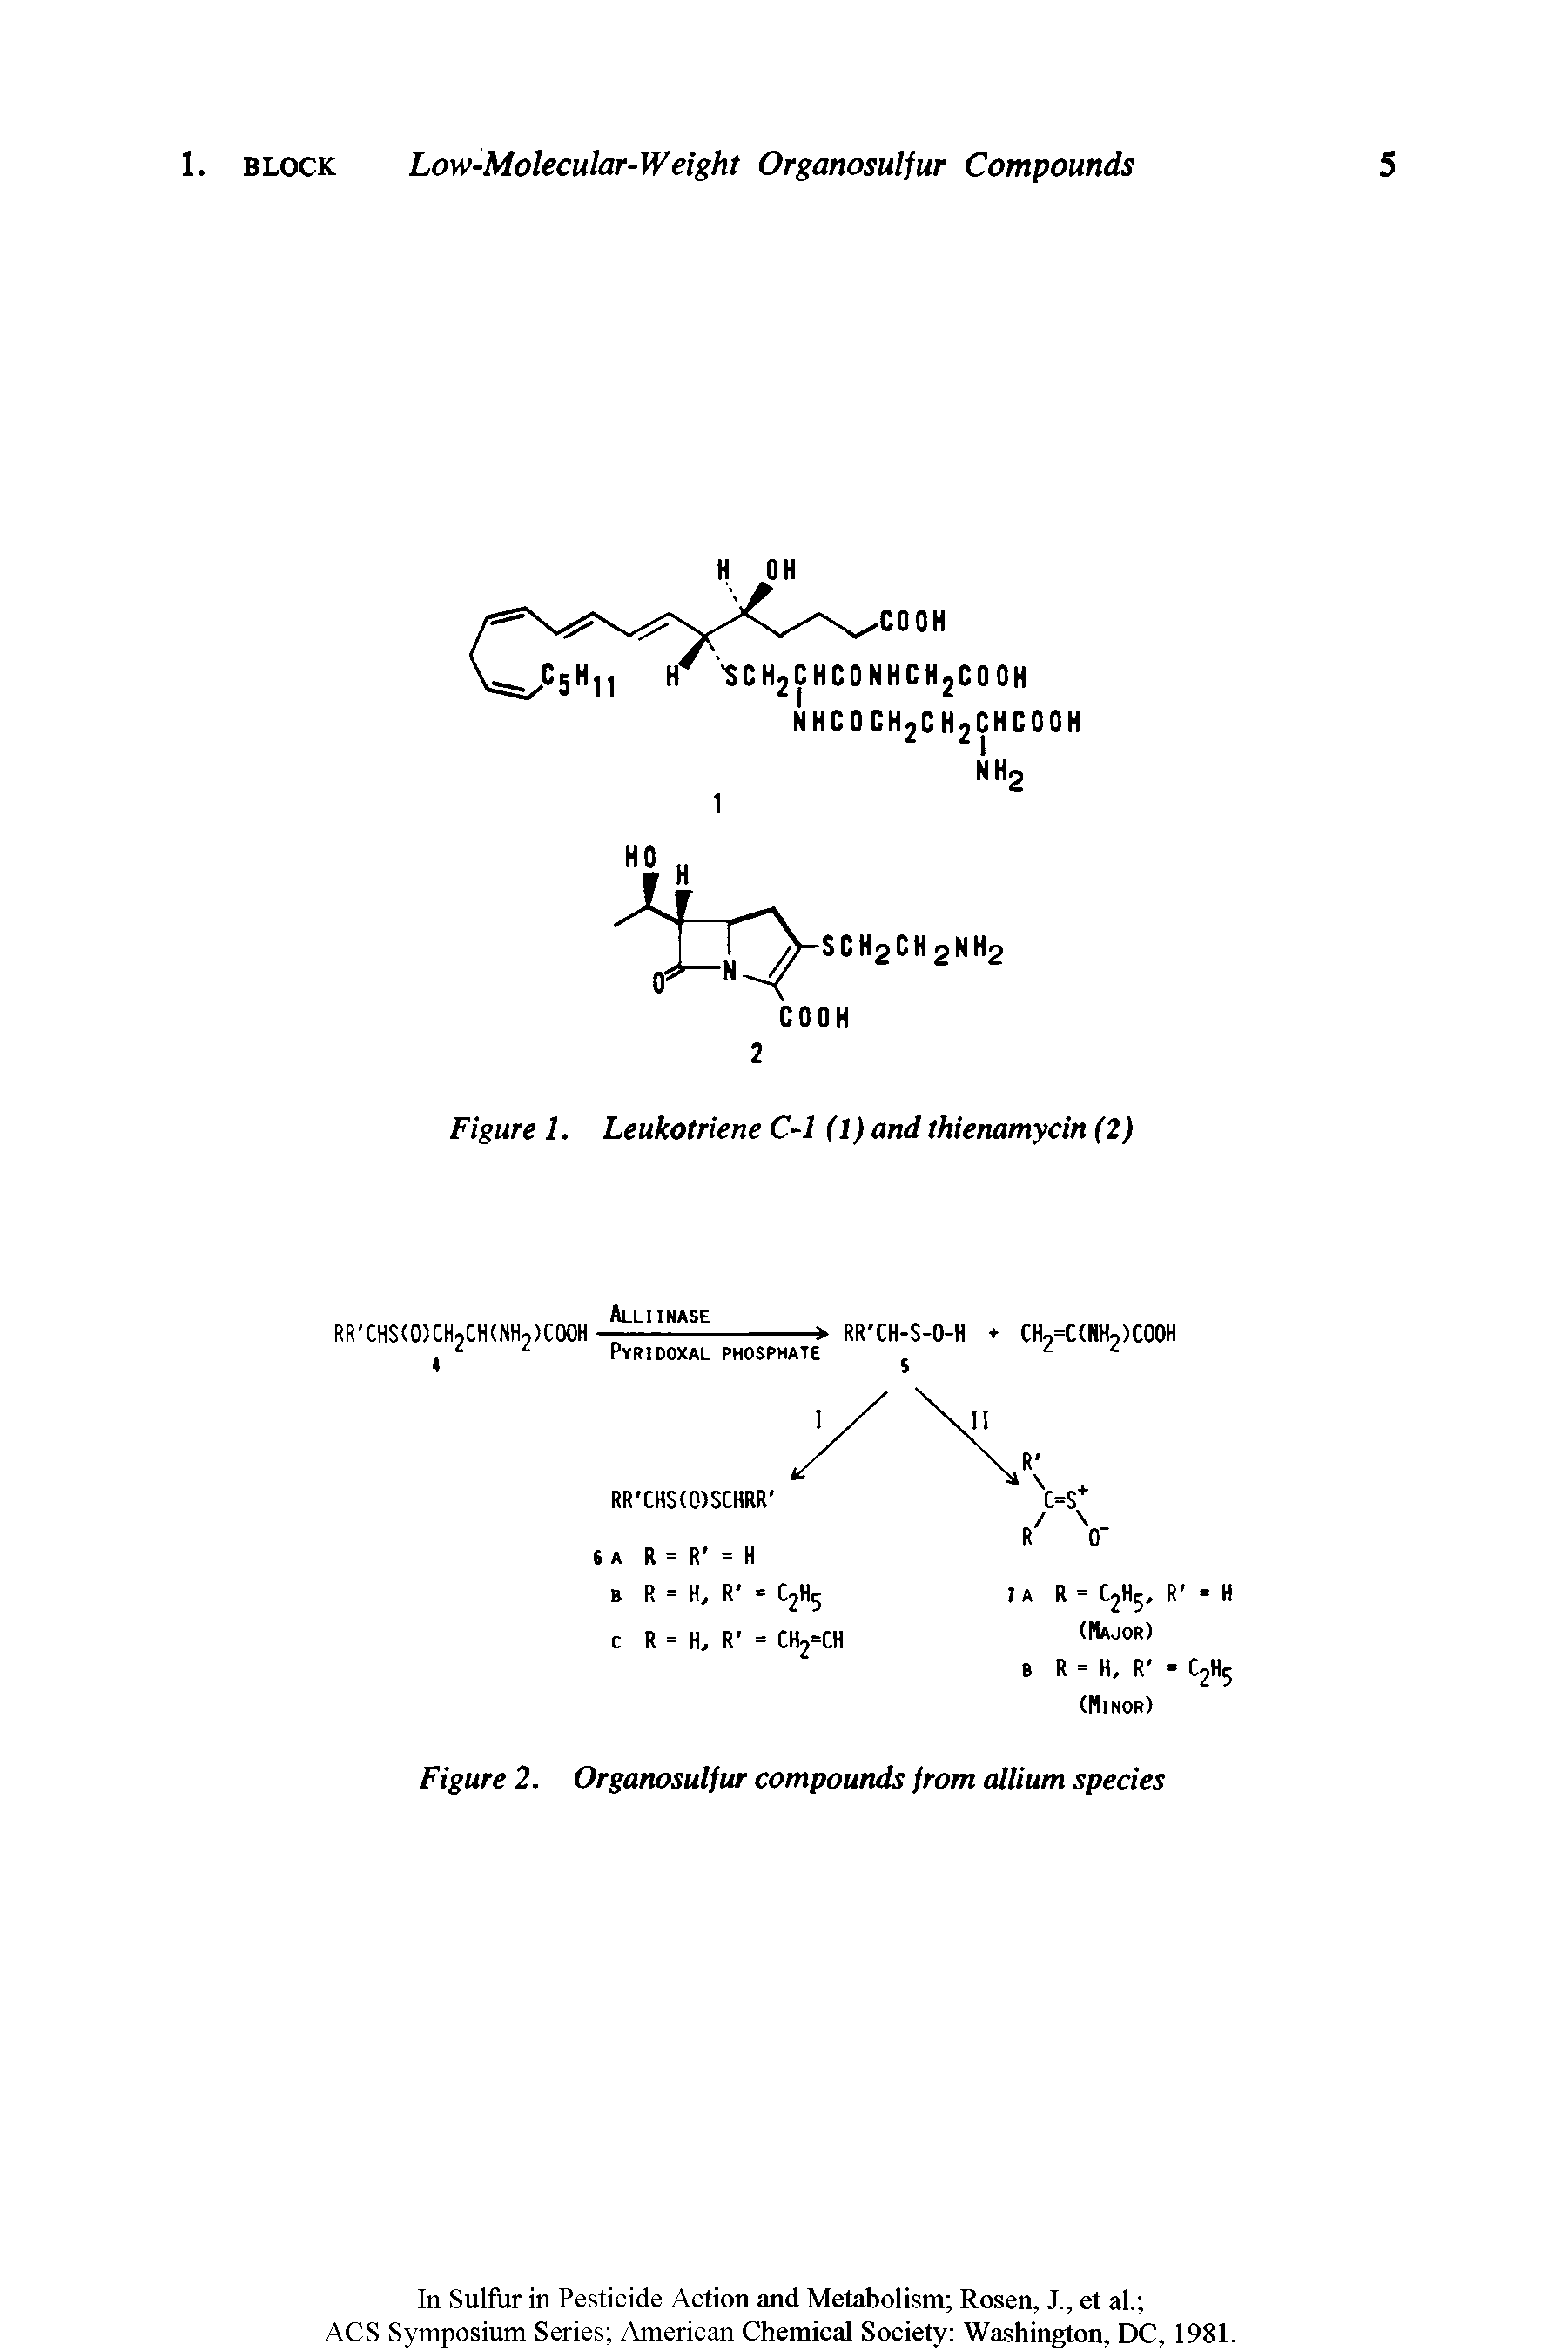 Figure 2. Organosulfur compounds from allium species...